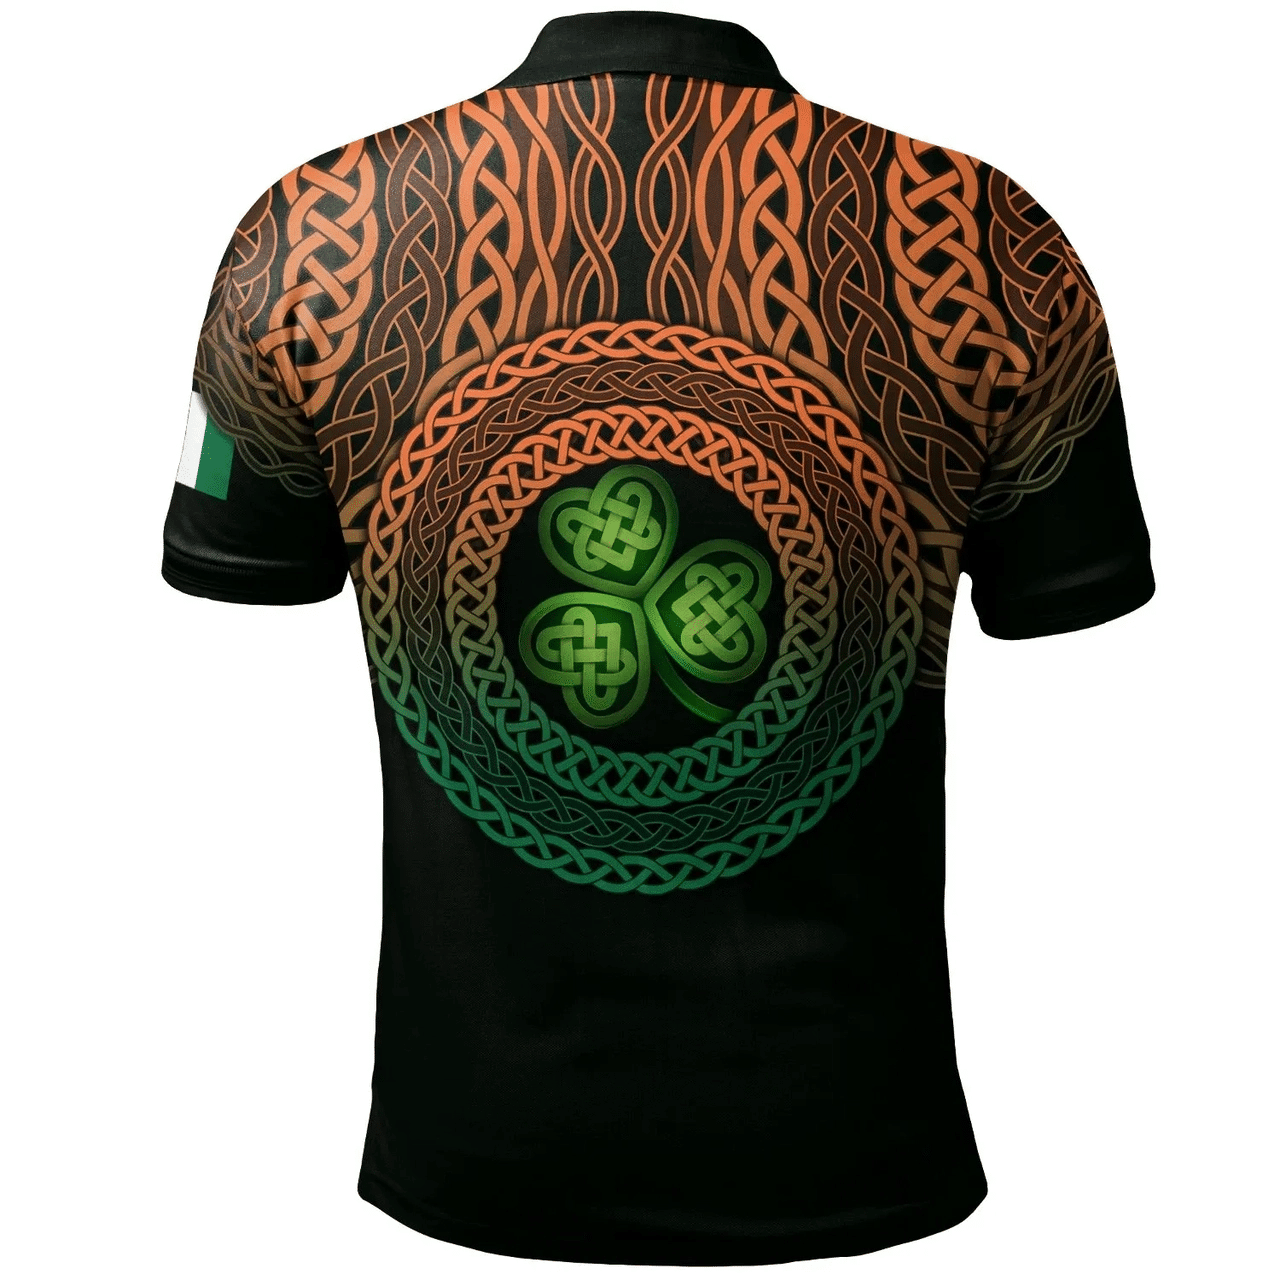 1stIreland Ireland Polo Shirt - Halloran or O'Halloran Irish Family Crest Polo Shirt - Celtic Pride A7 | 1stIreland.com